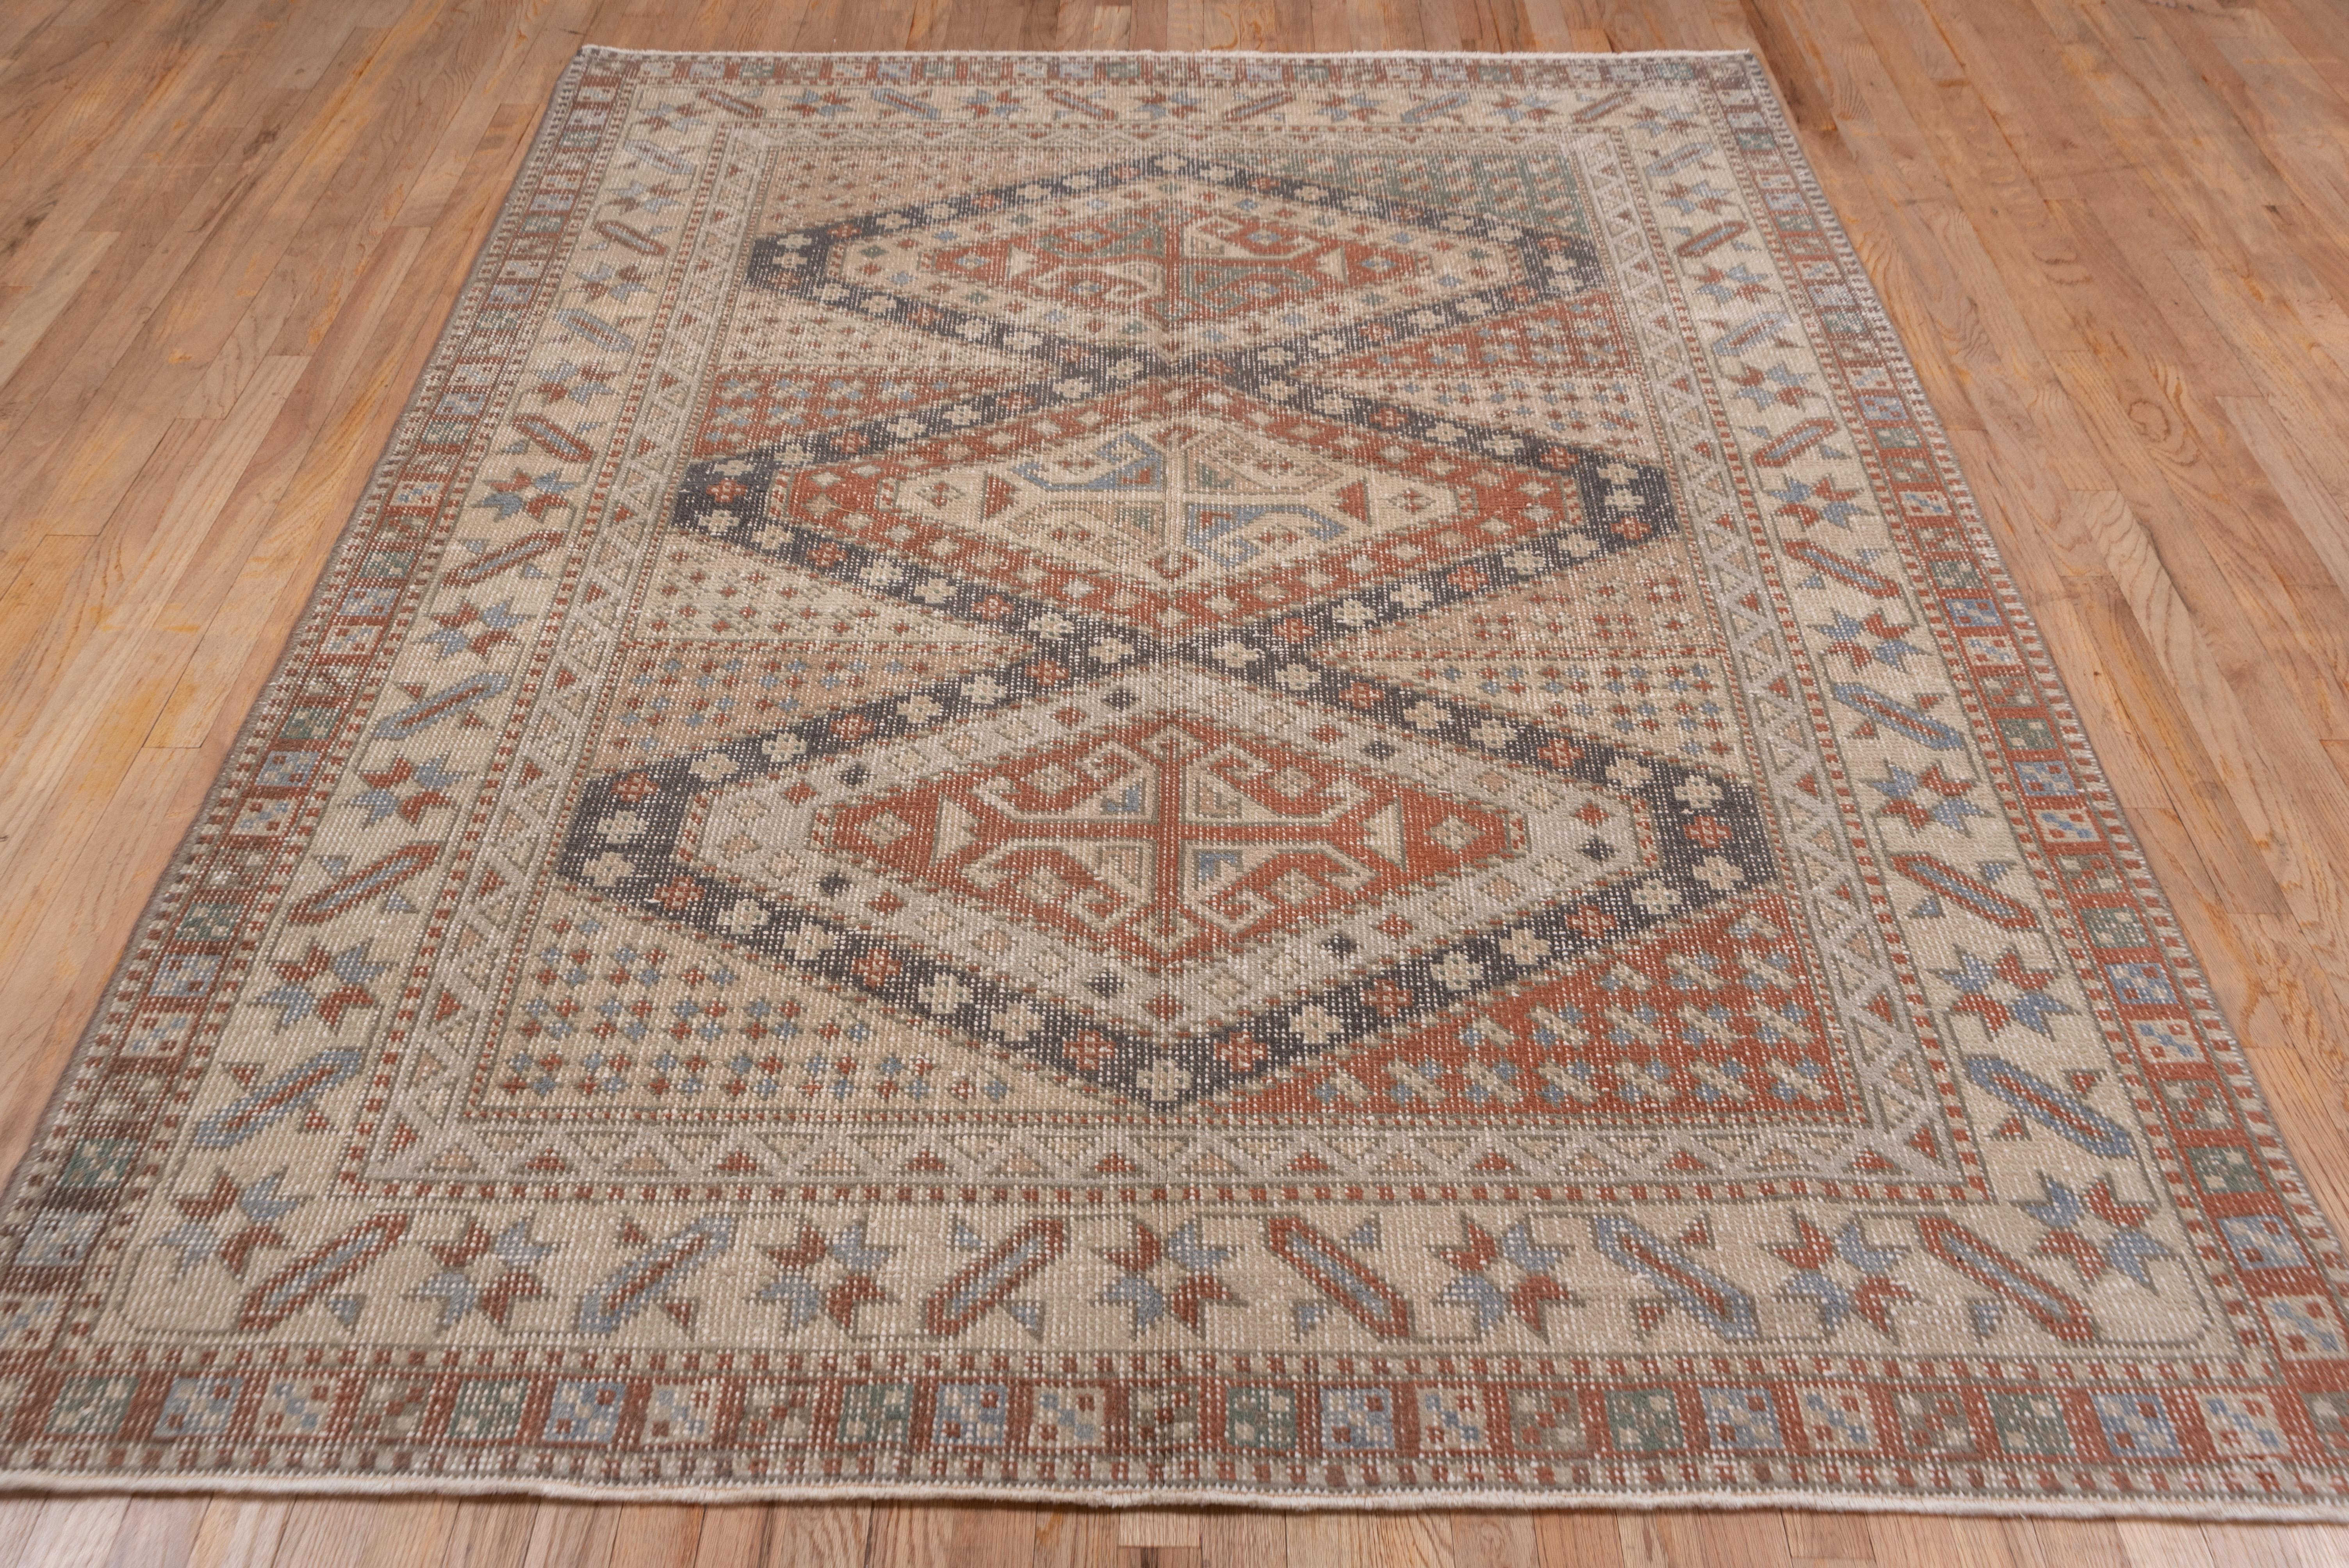 Hand-Knotted Vintage Tribal Turkish Sparta Carpet Geometric Design, Brown, Ivory & Blue Tones For Sale